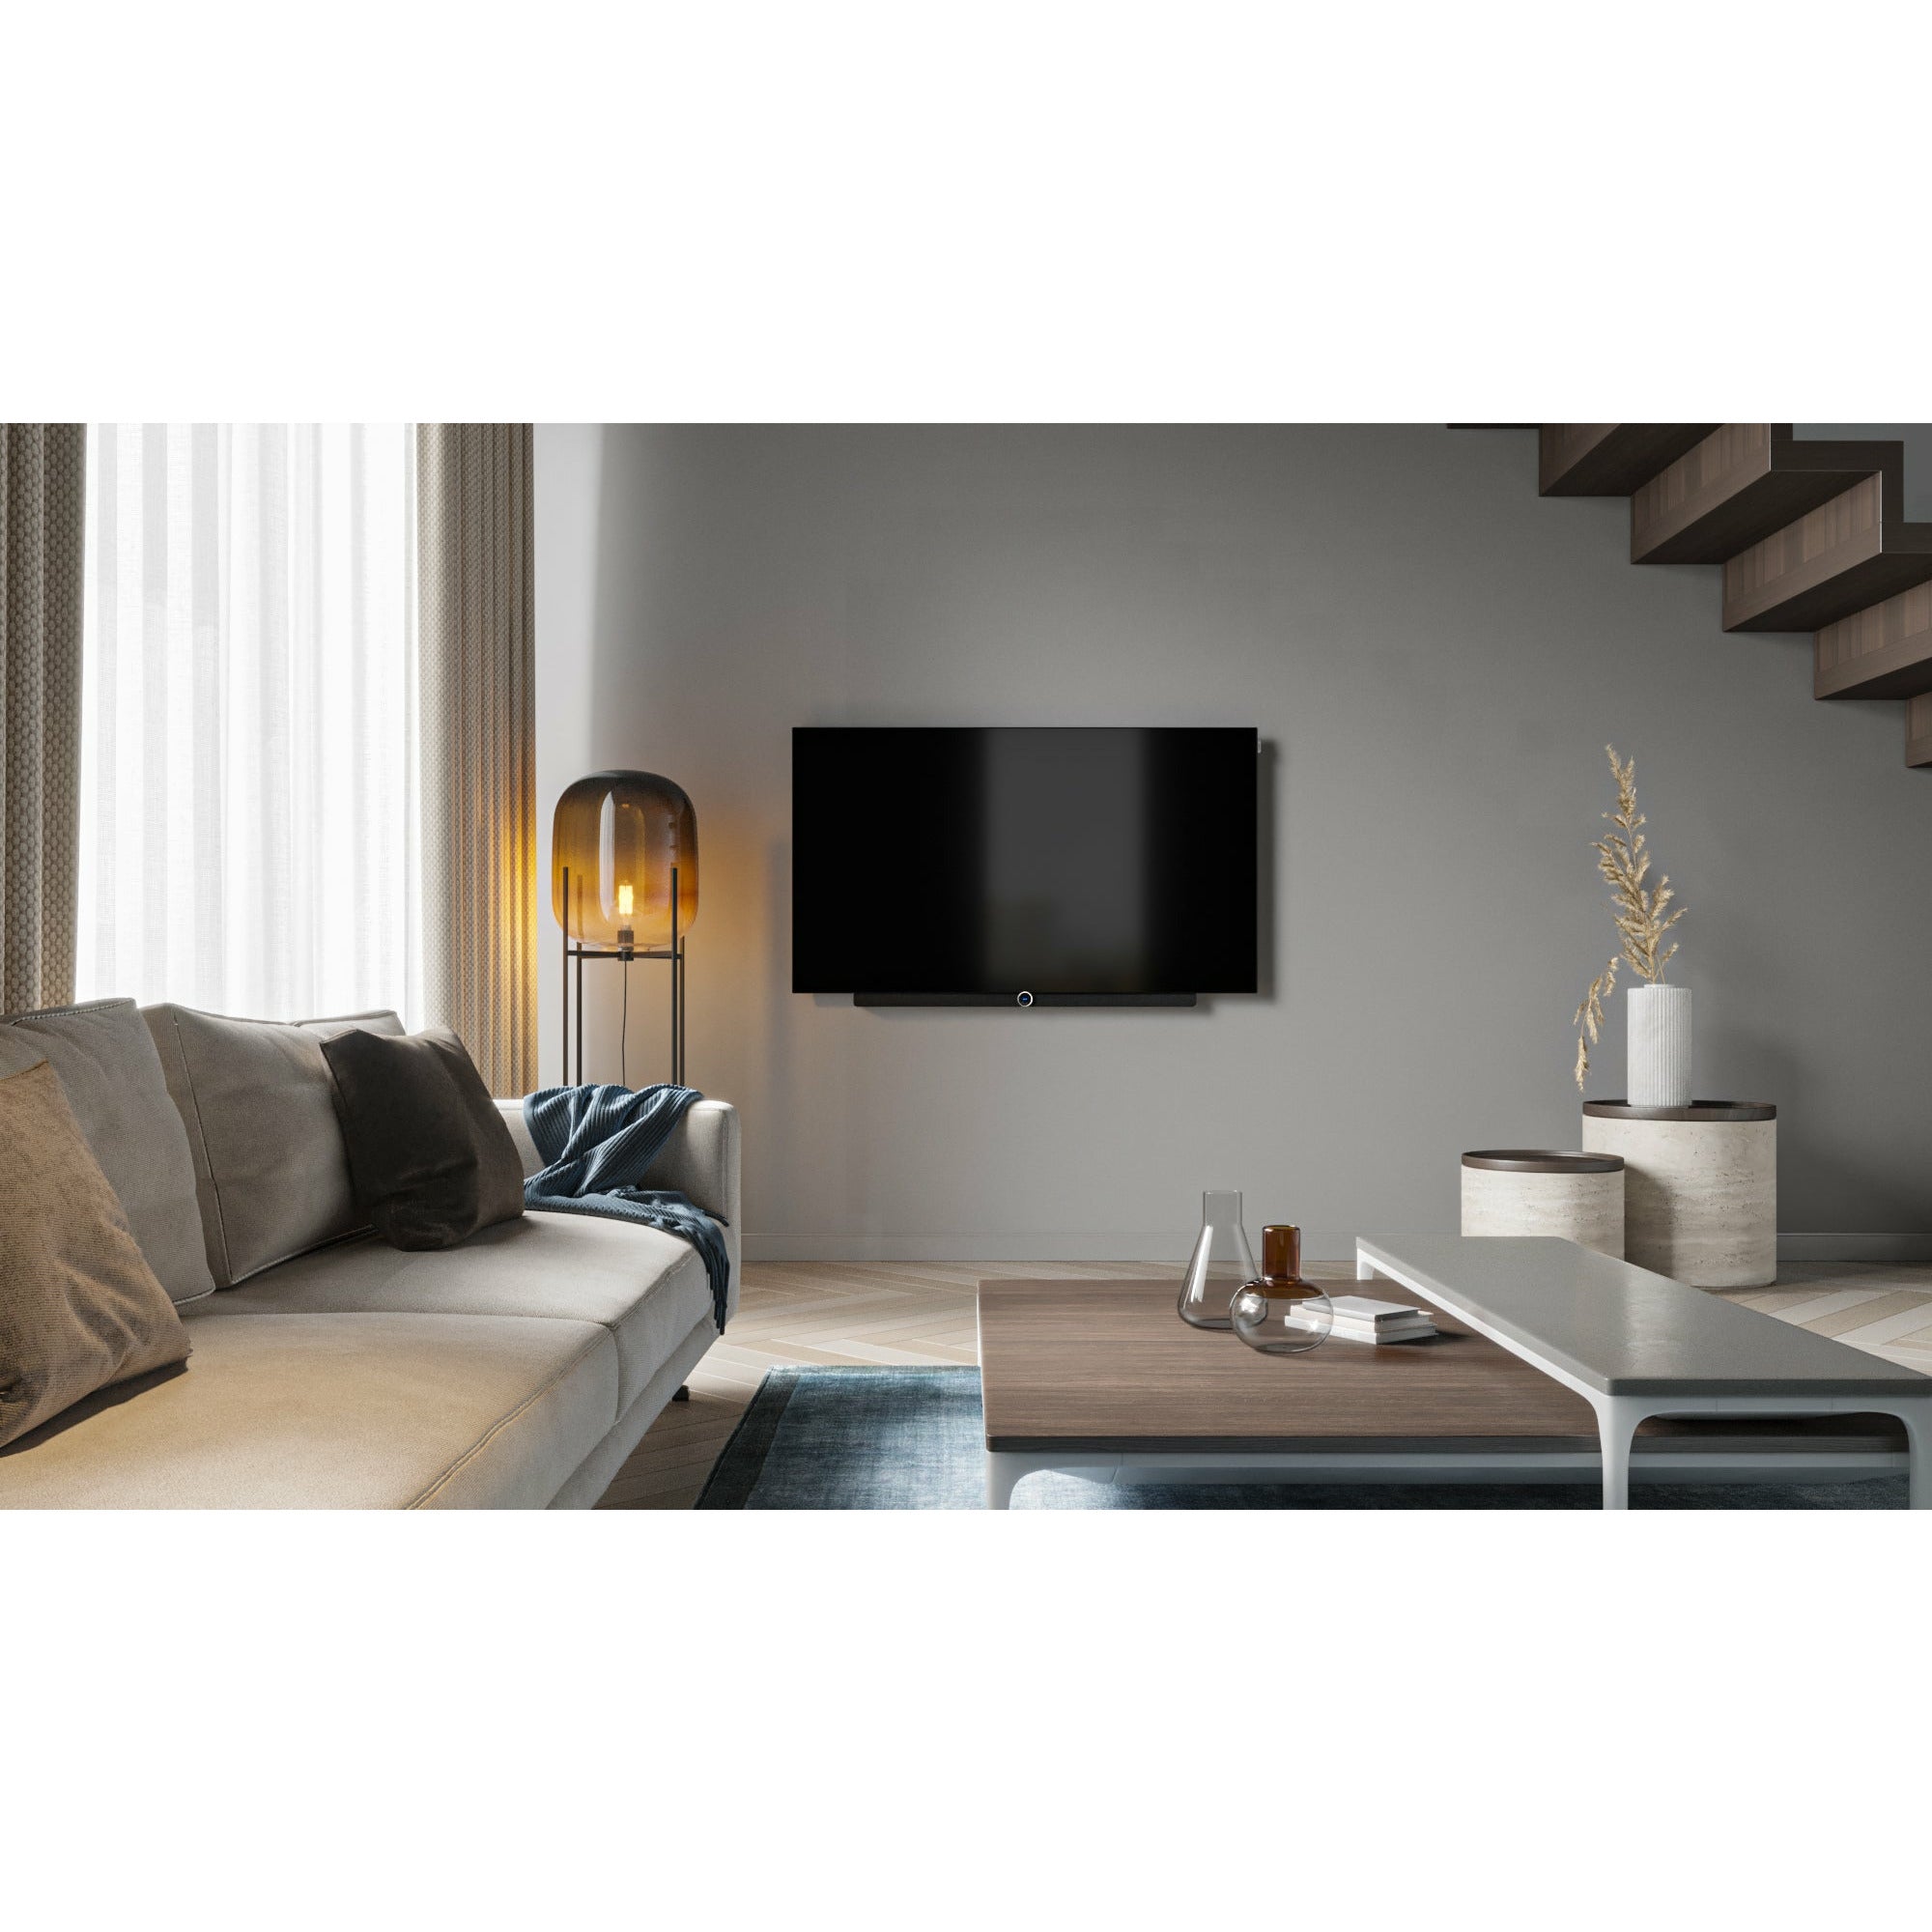 Loewe BILD 3.55 O-LED 55" TV With Flex Foor Stand - Ex-Demo